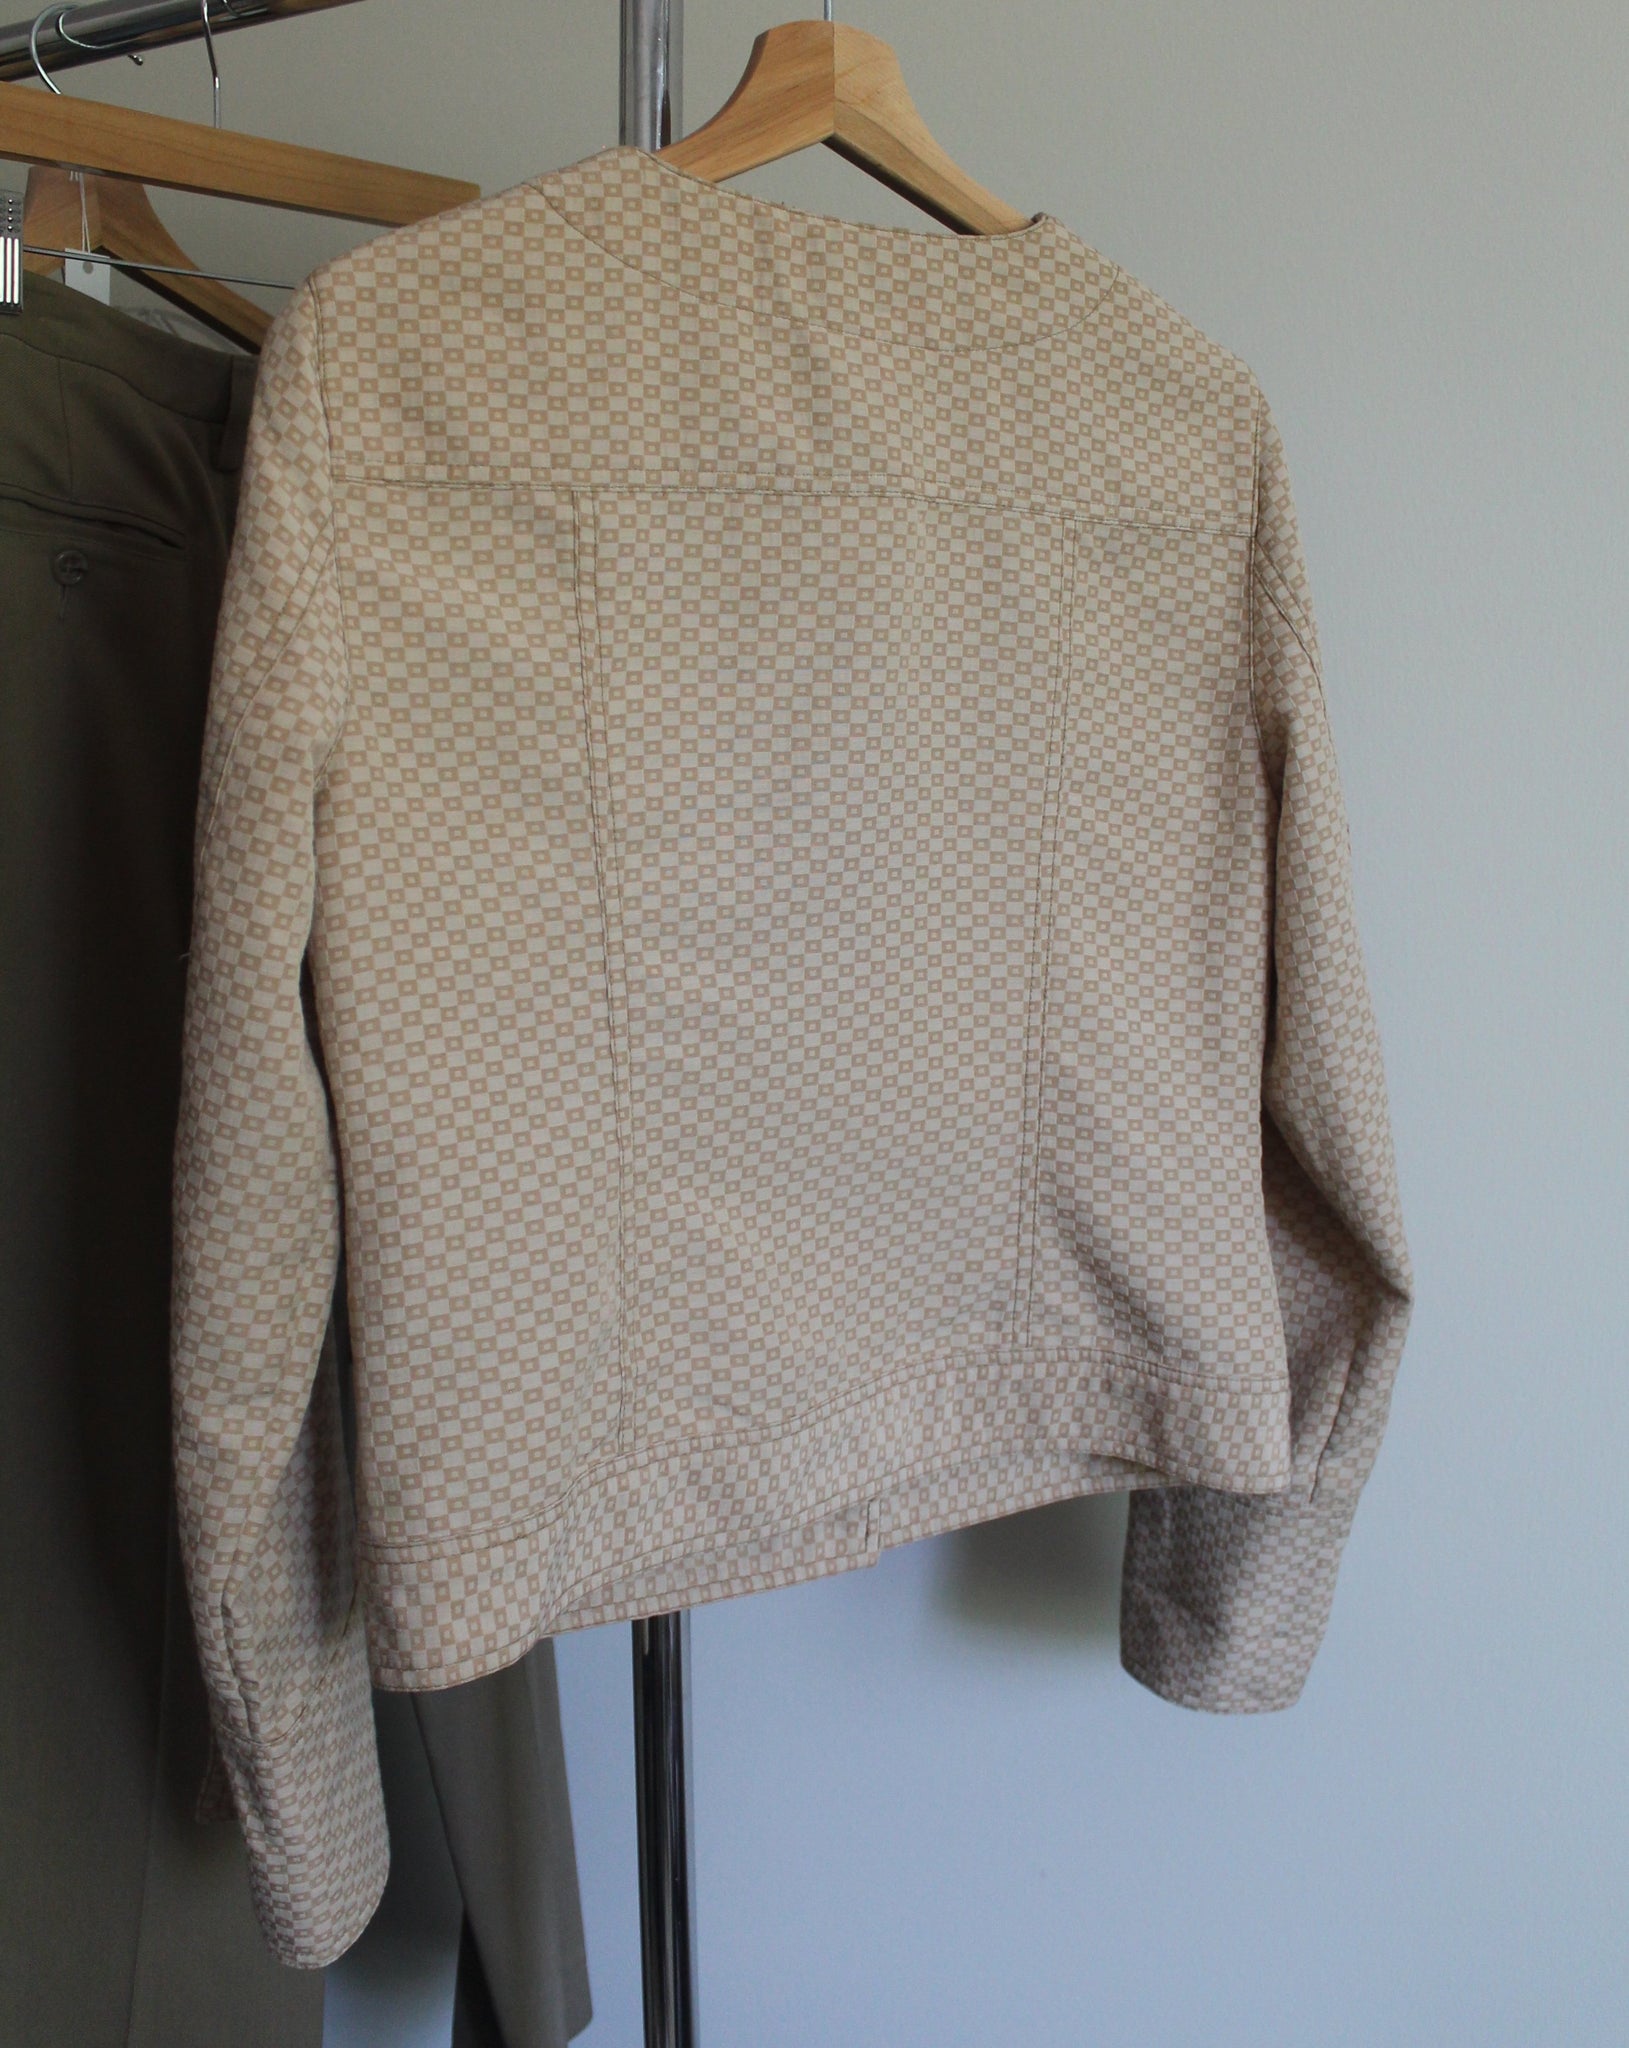 00s Light Tan Checkered Jacket (Size 6)